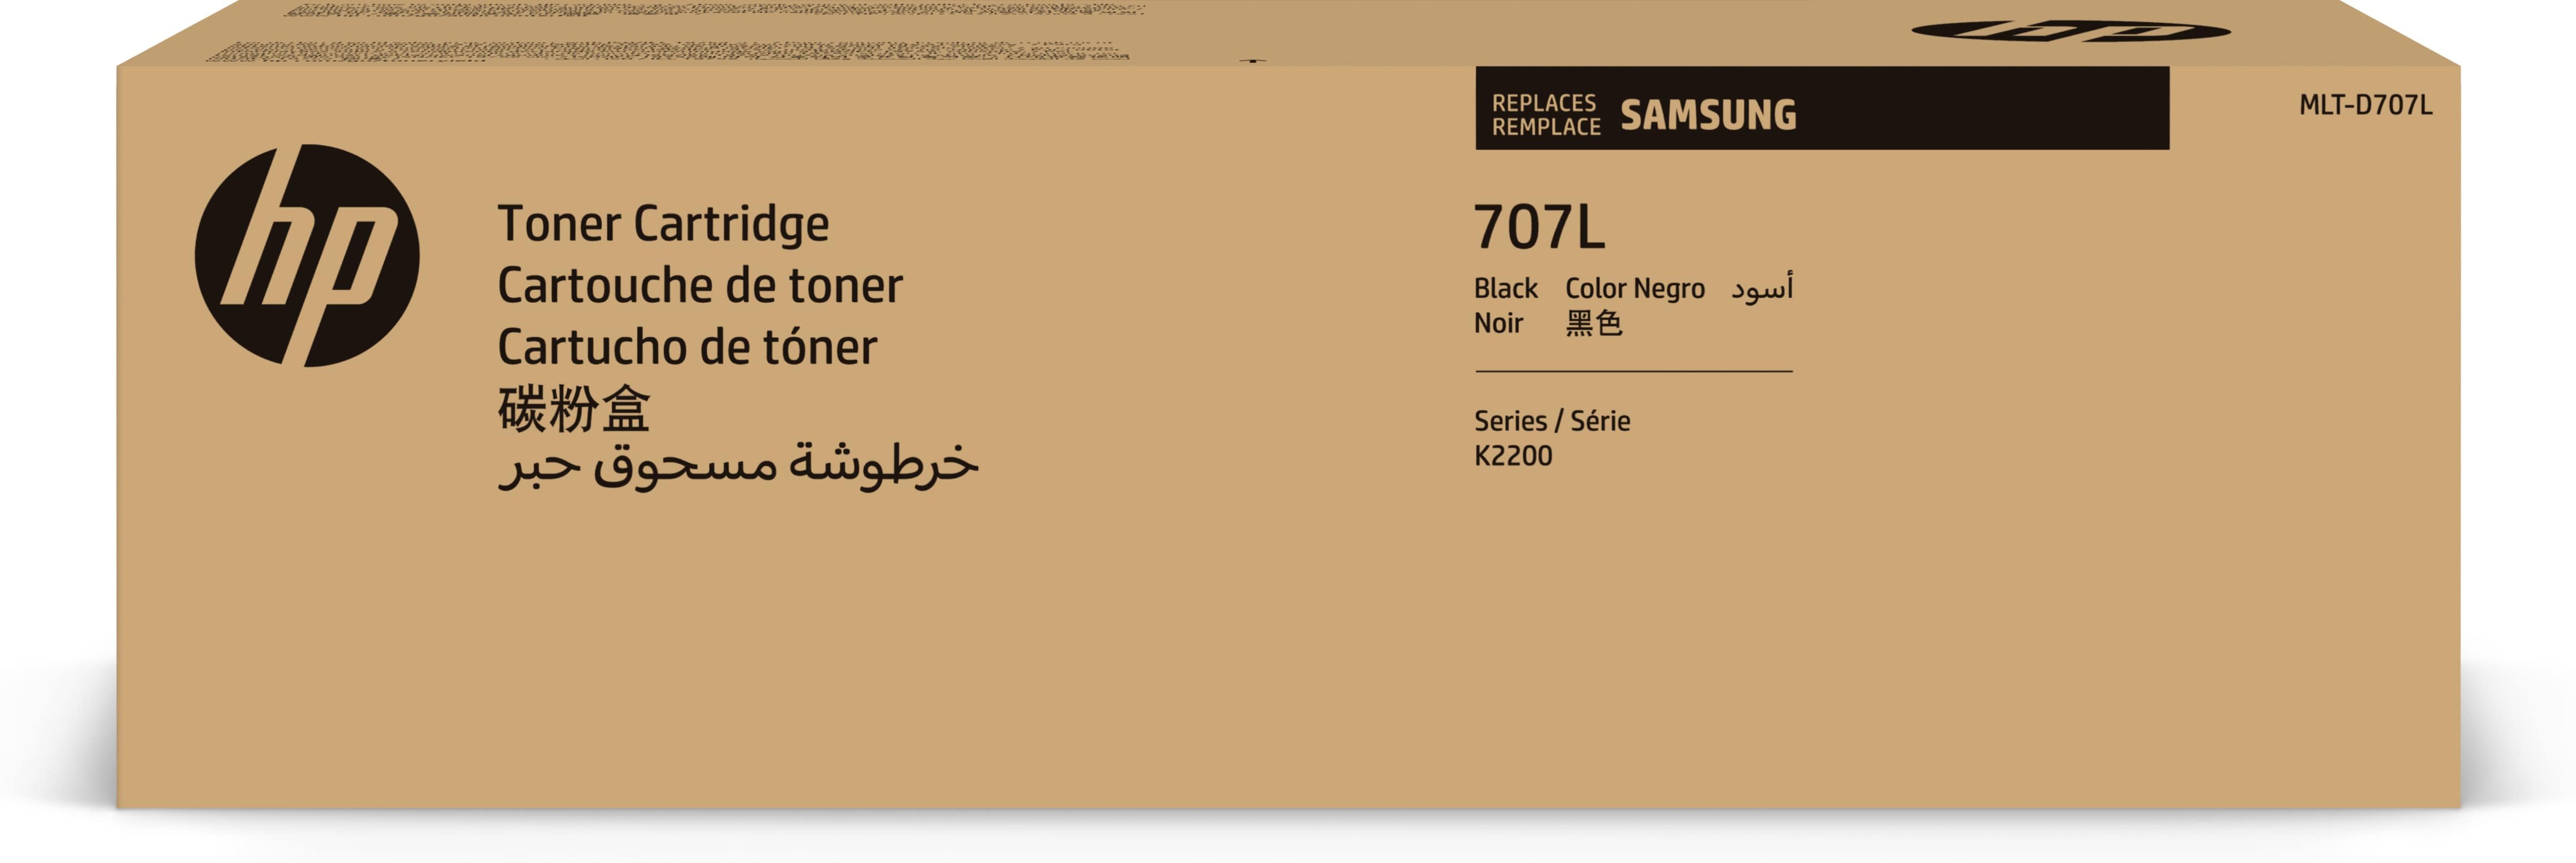 Samsung Tóner MLT-D707L / SS775A Negro